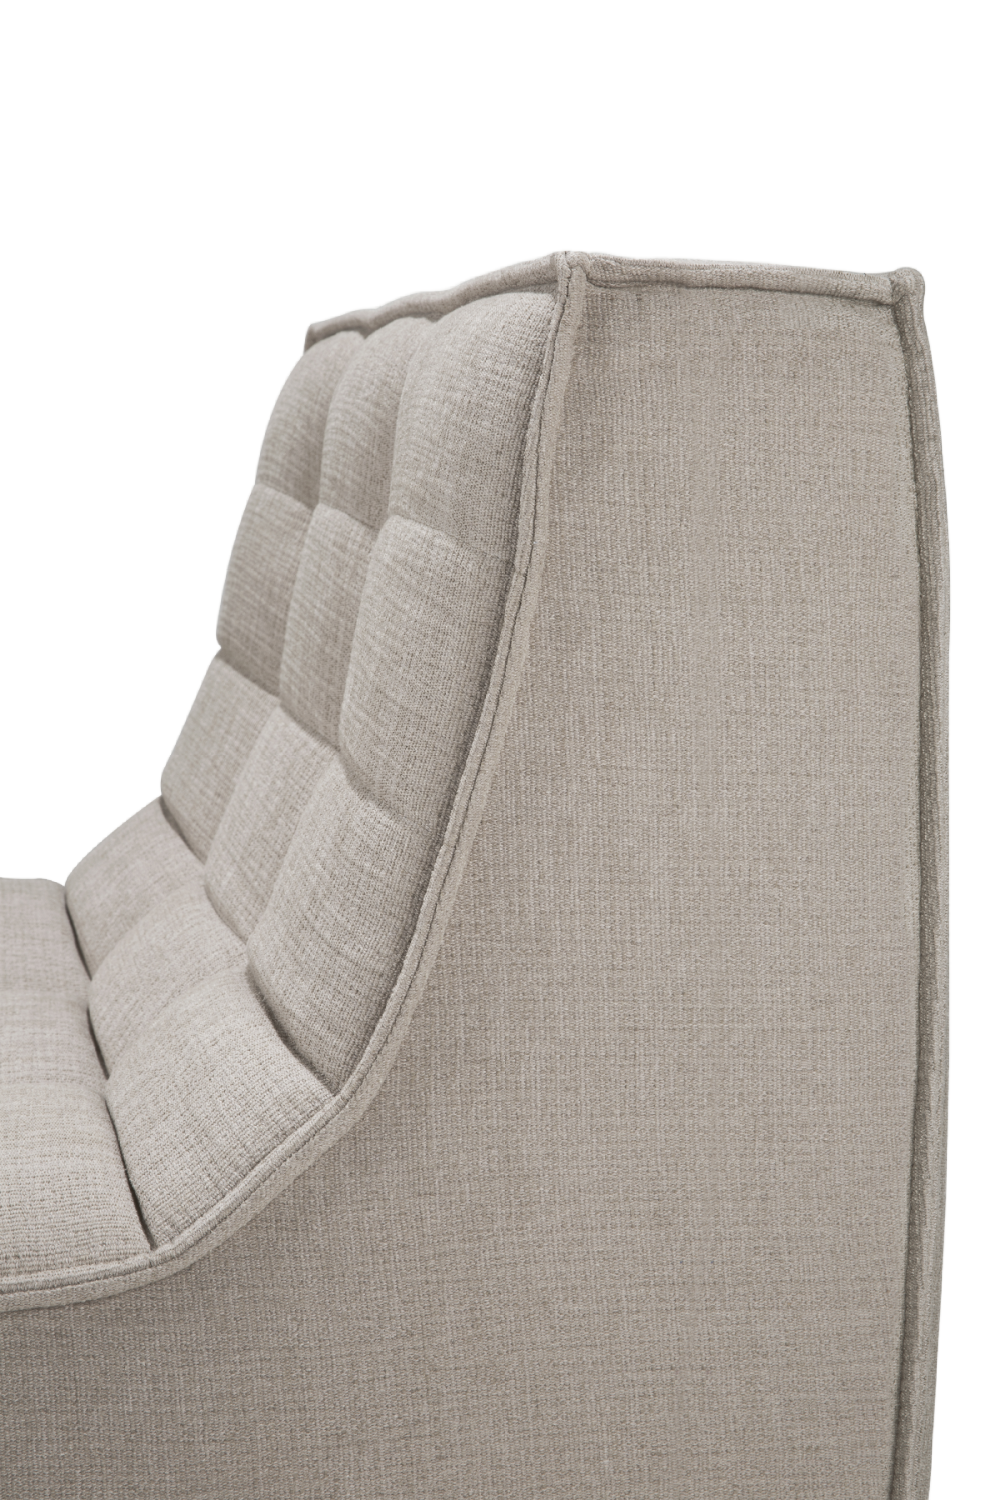 Gray Modular Sofa | Ethnicraft N701 | Oroa.com